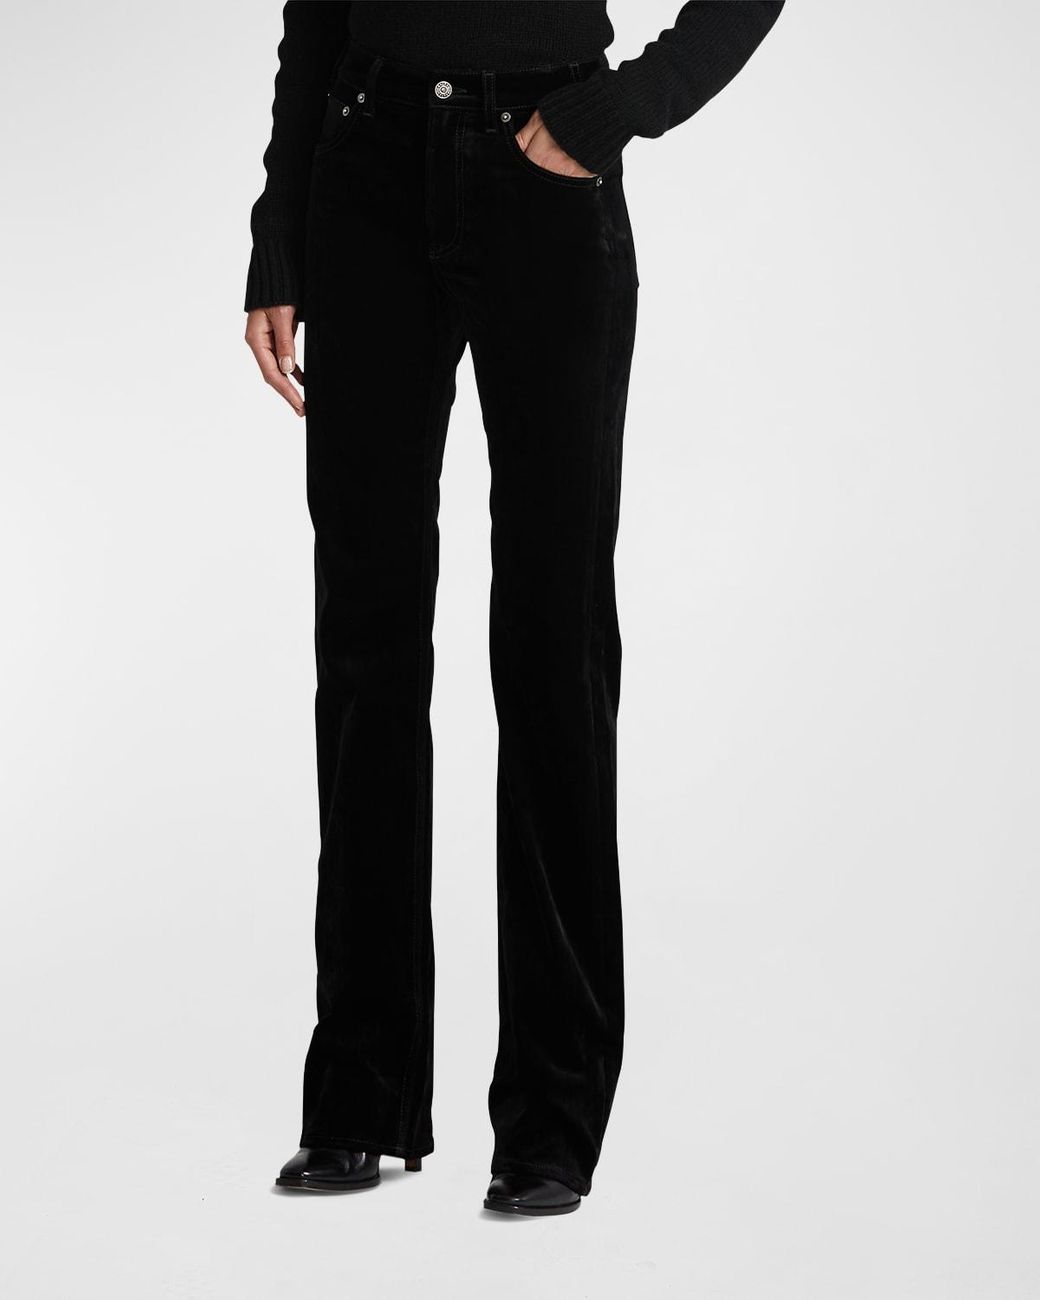 Ralph Lauren Collection Kaida Velvet Bootcut Jeans in Black | Lyst